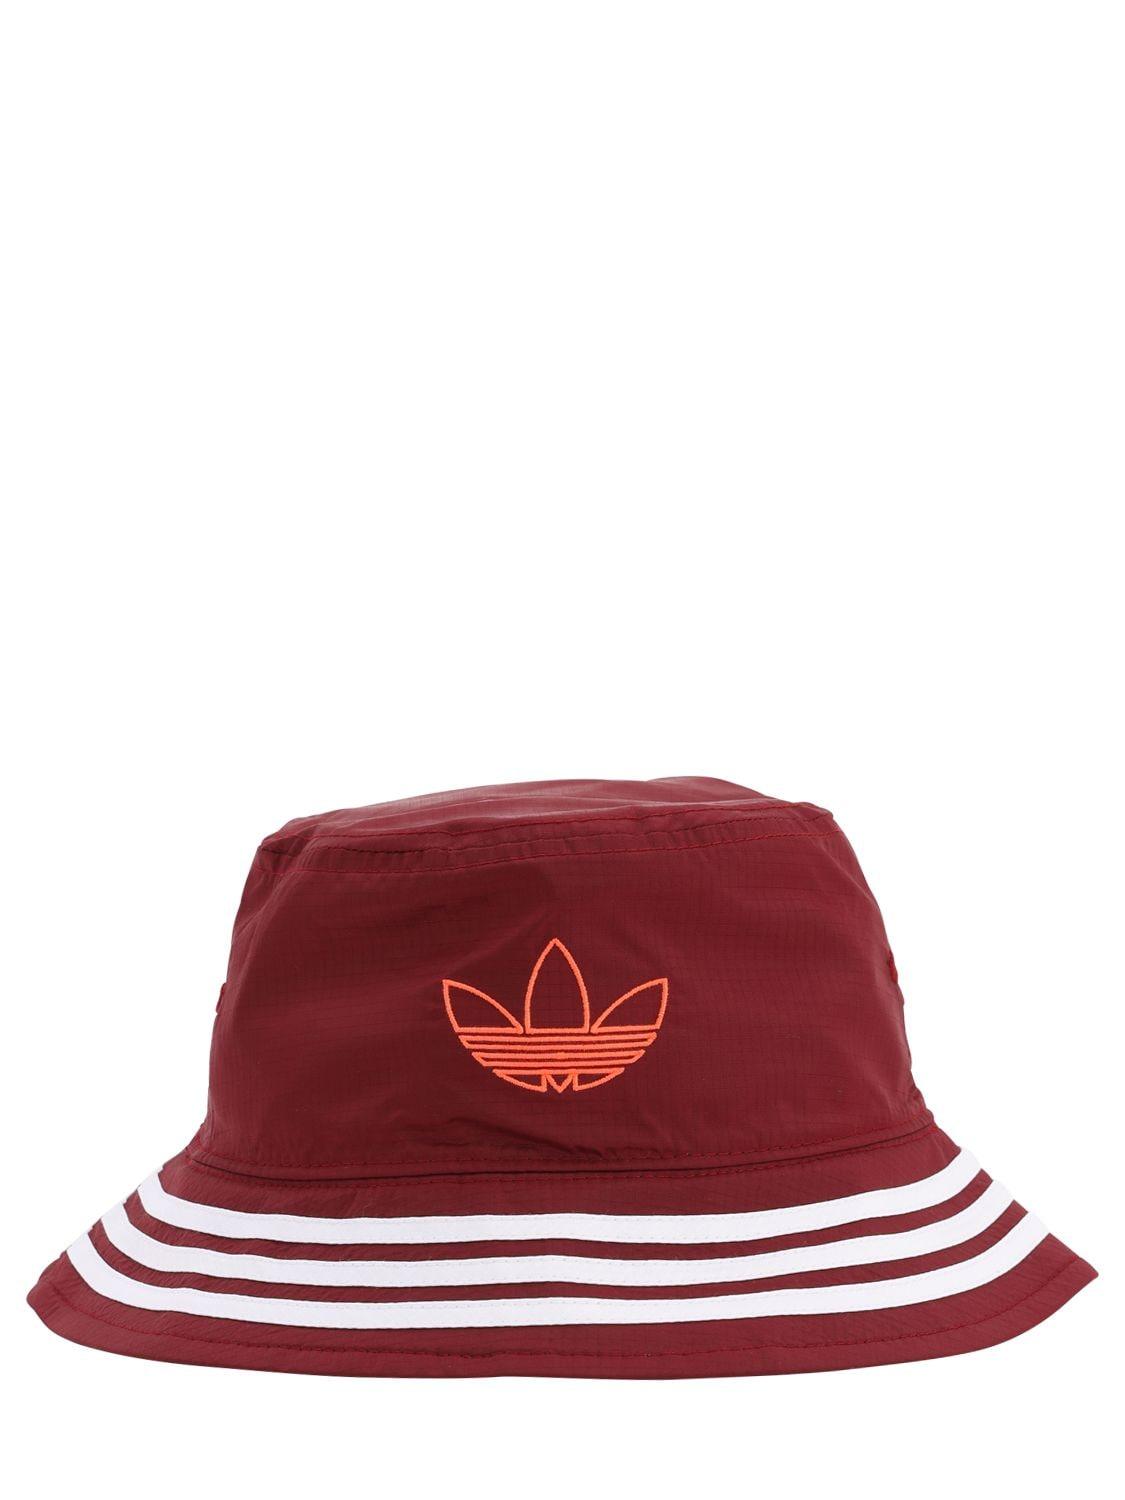 adidas Originals Reversible Trefoil Logo Bucket Hat in Navy/Bordeaux (Red)  - Lyst